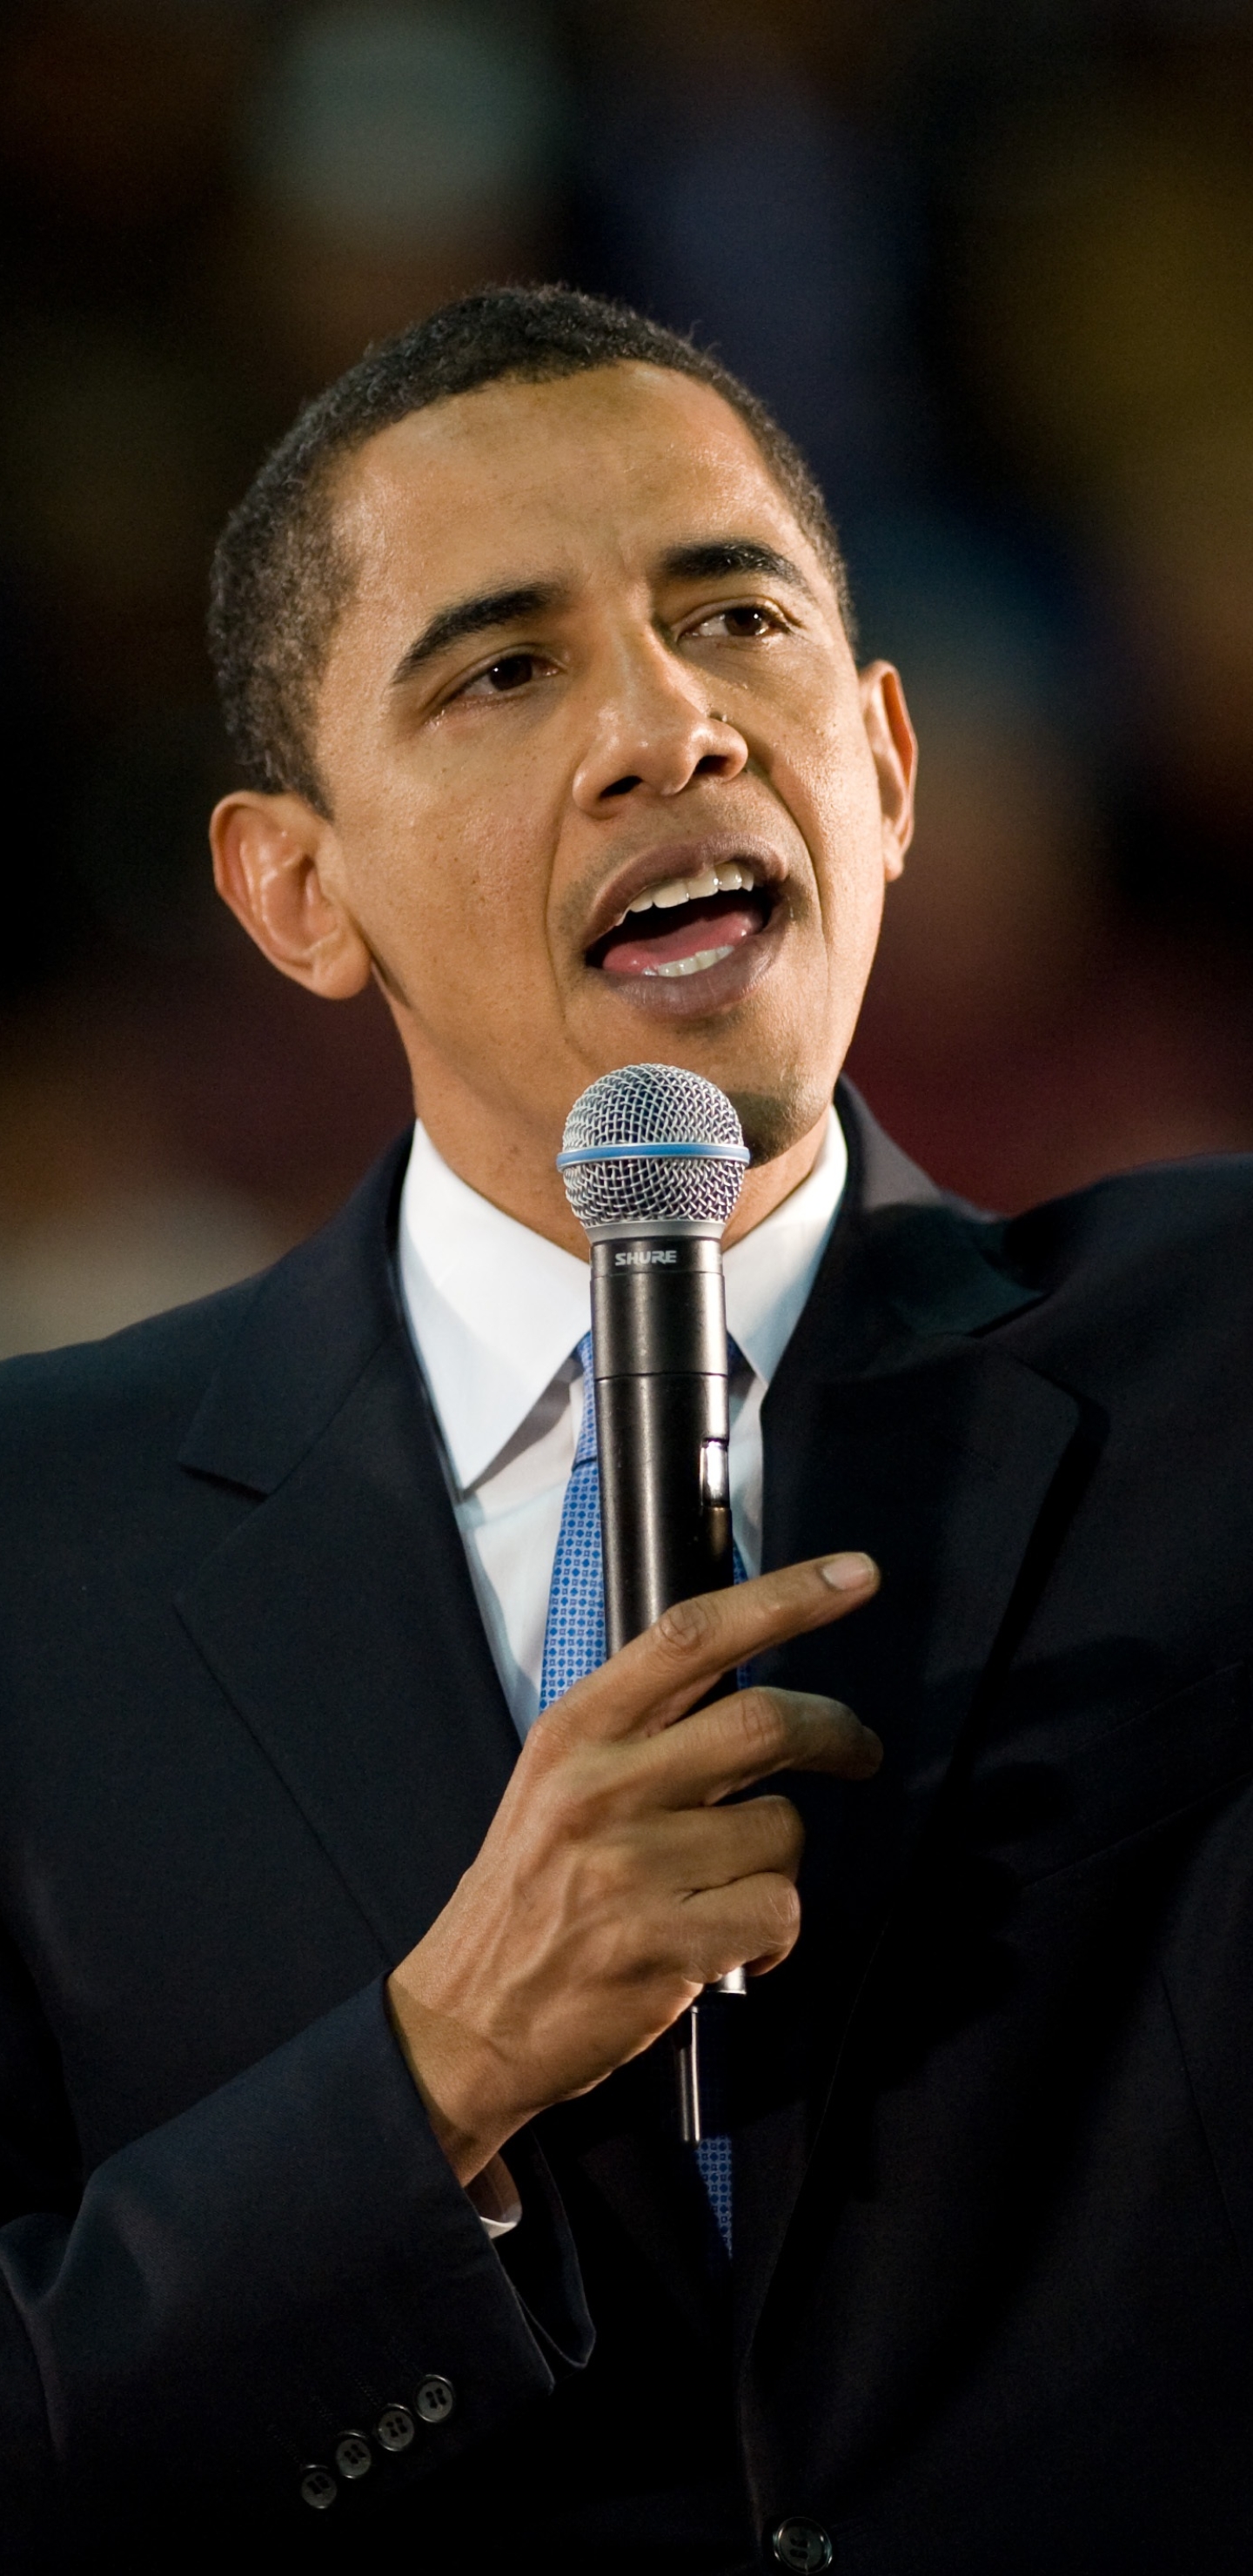 Barack Obama 44th President